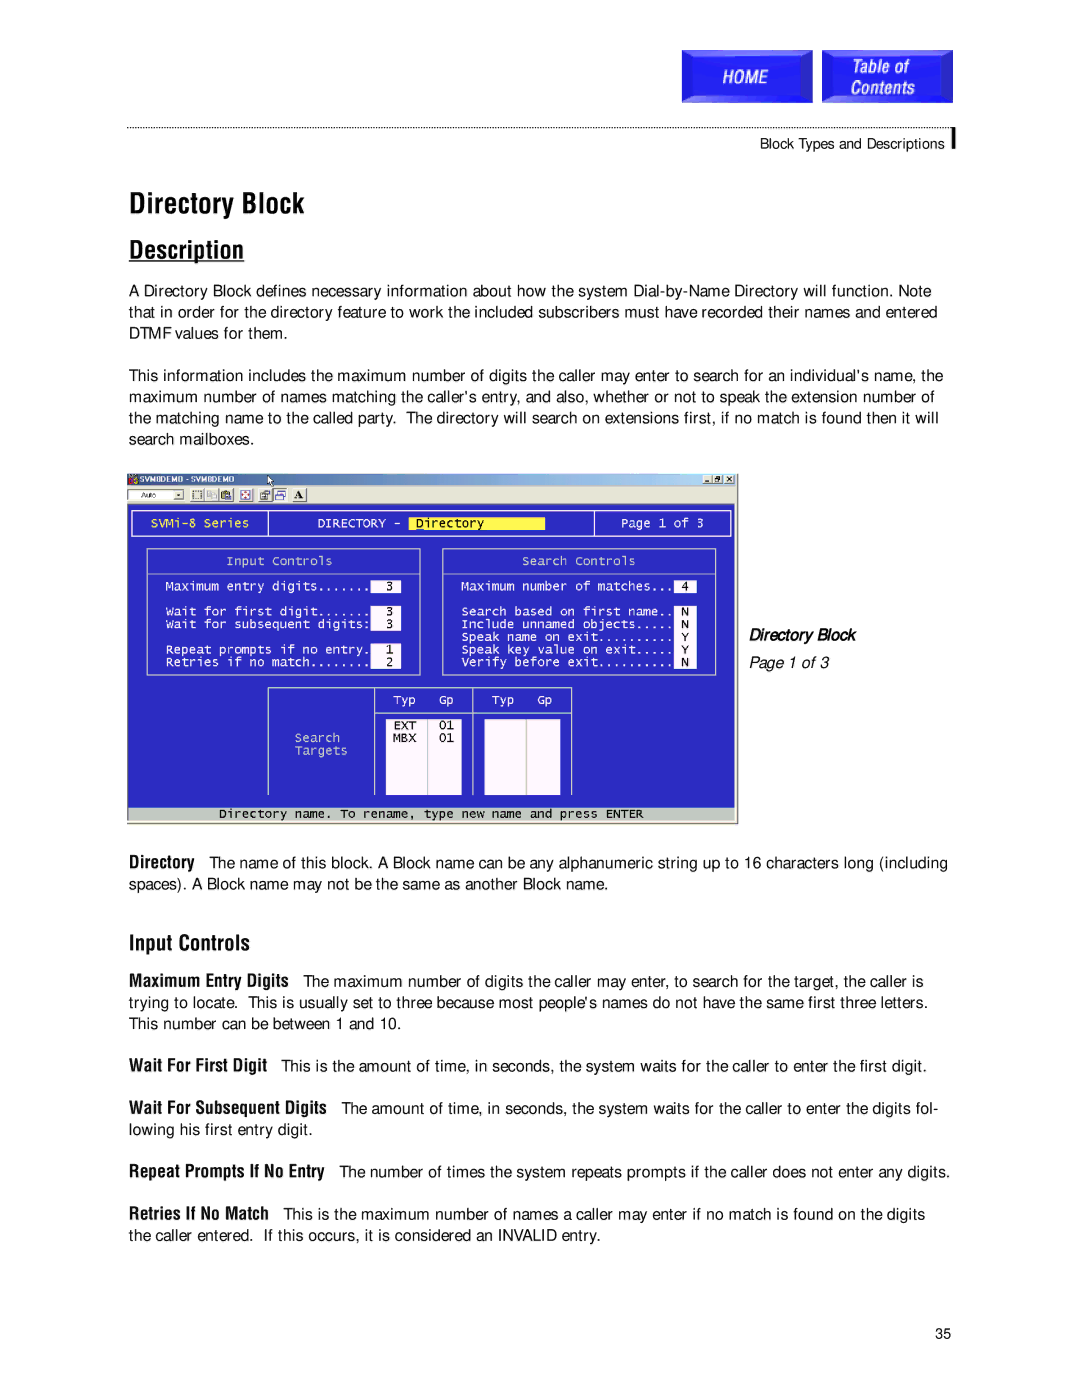 Samsung SVMi-8 technical manual Directory Block, Input Controls 